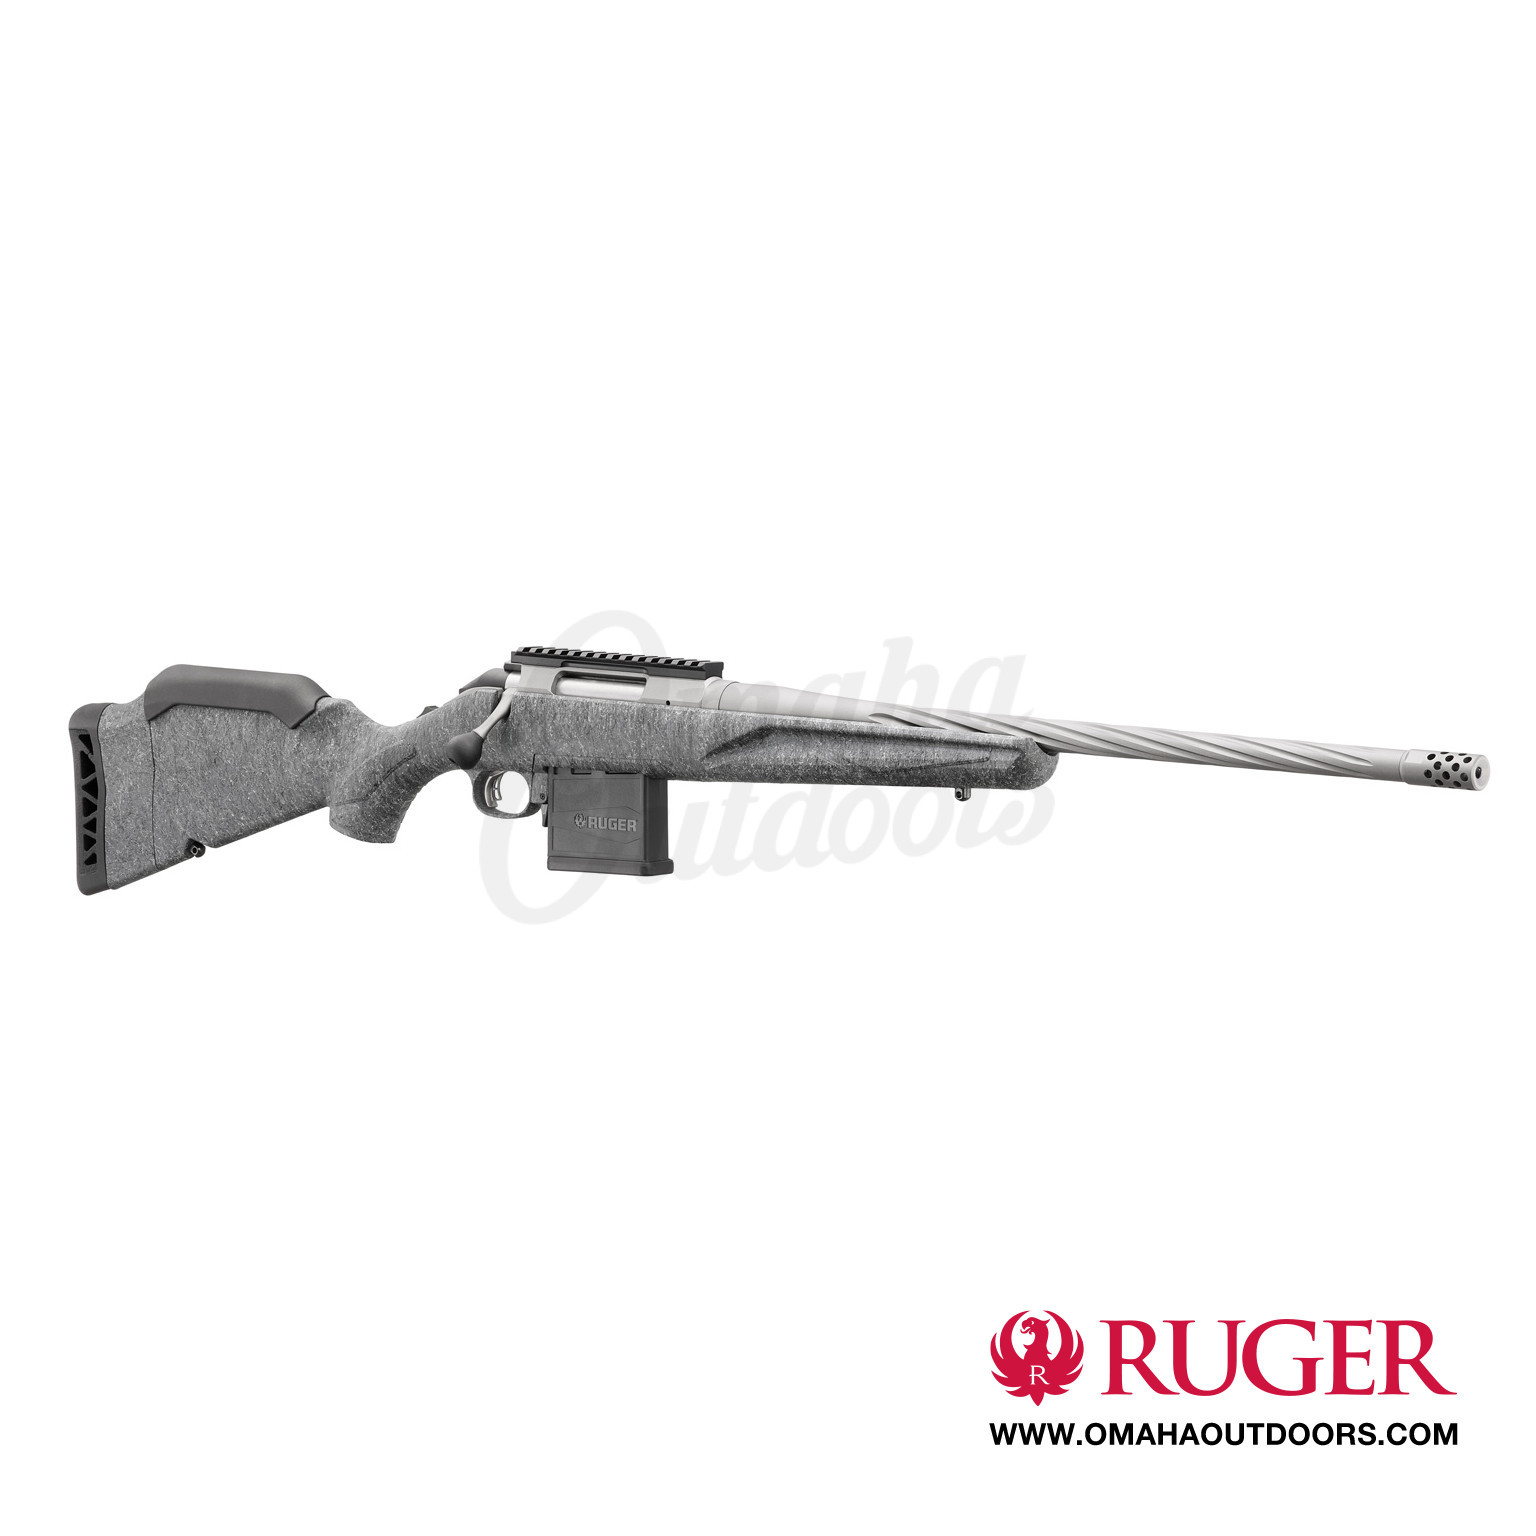 Rifle Review: Ruger American Gen II